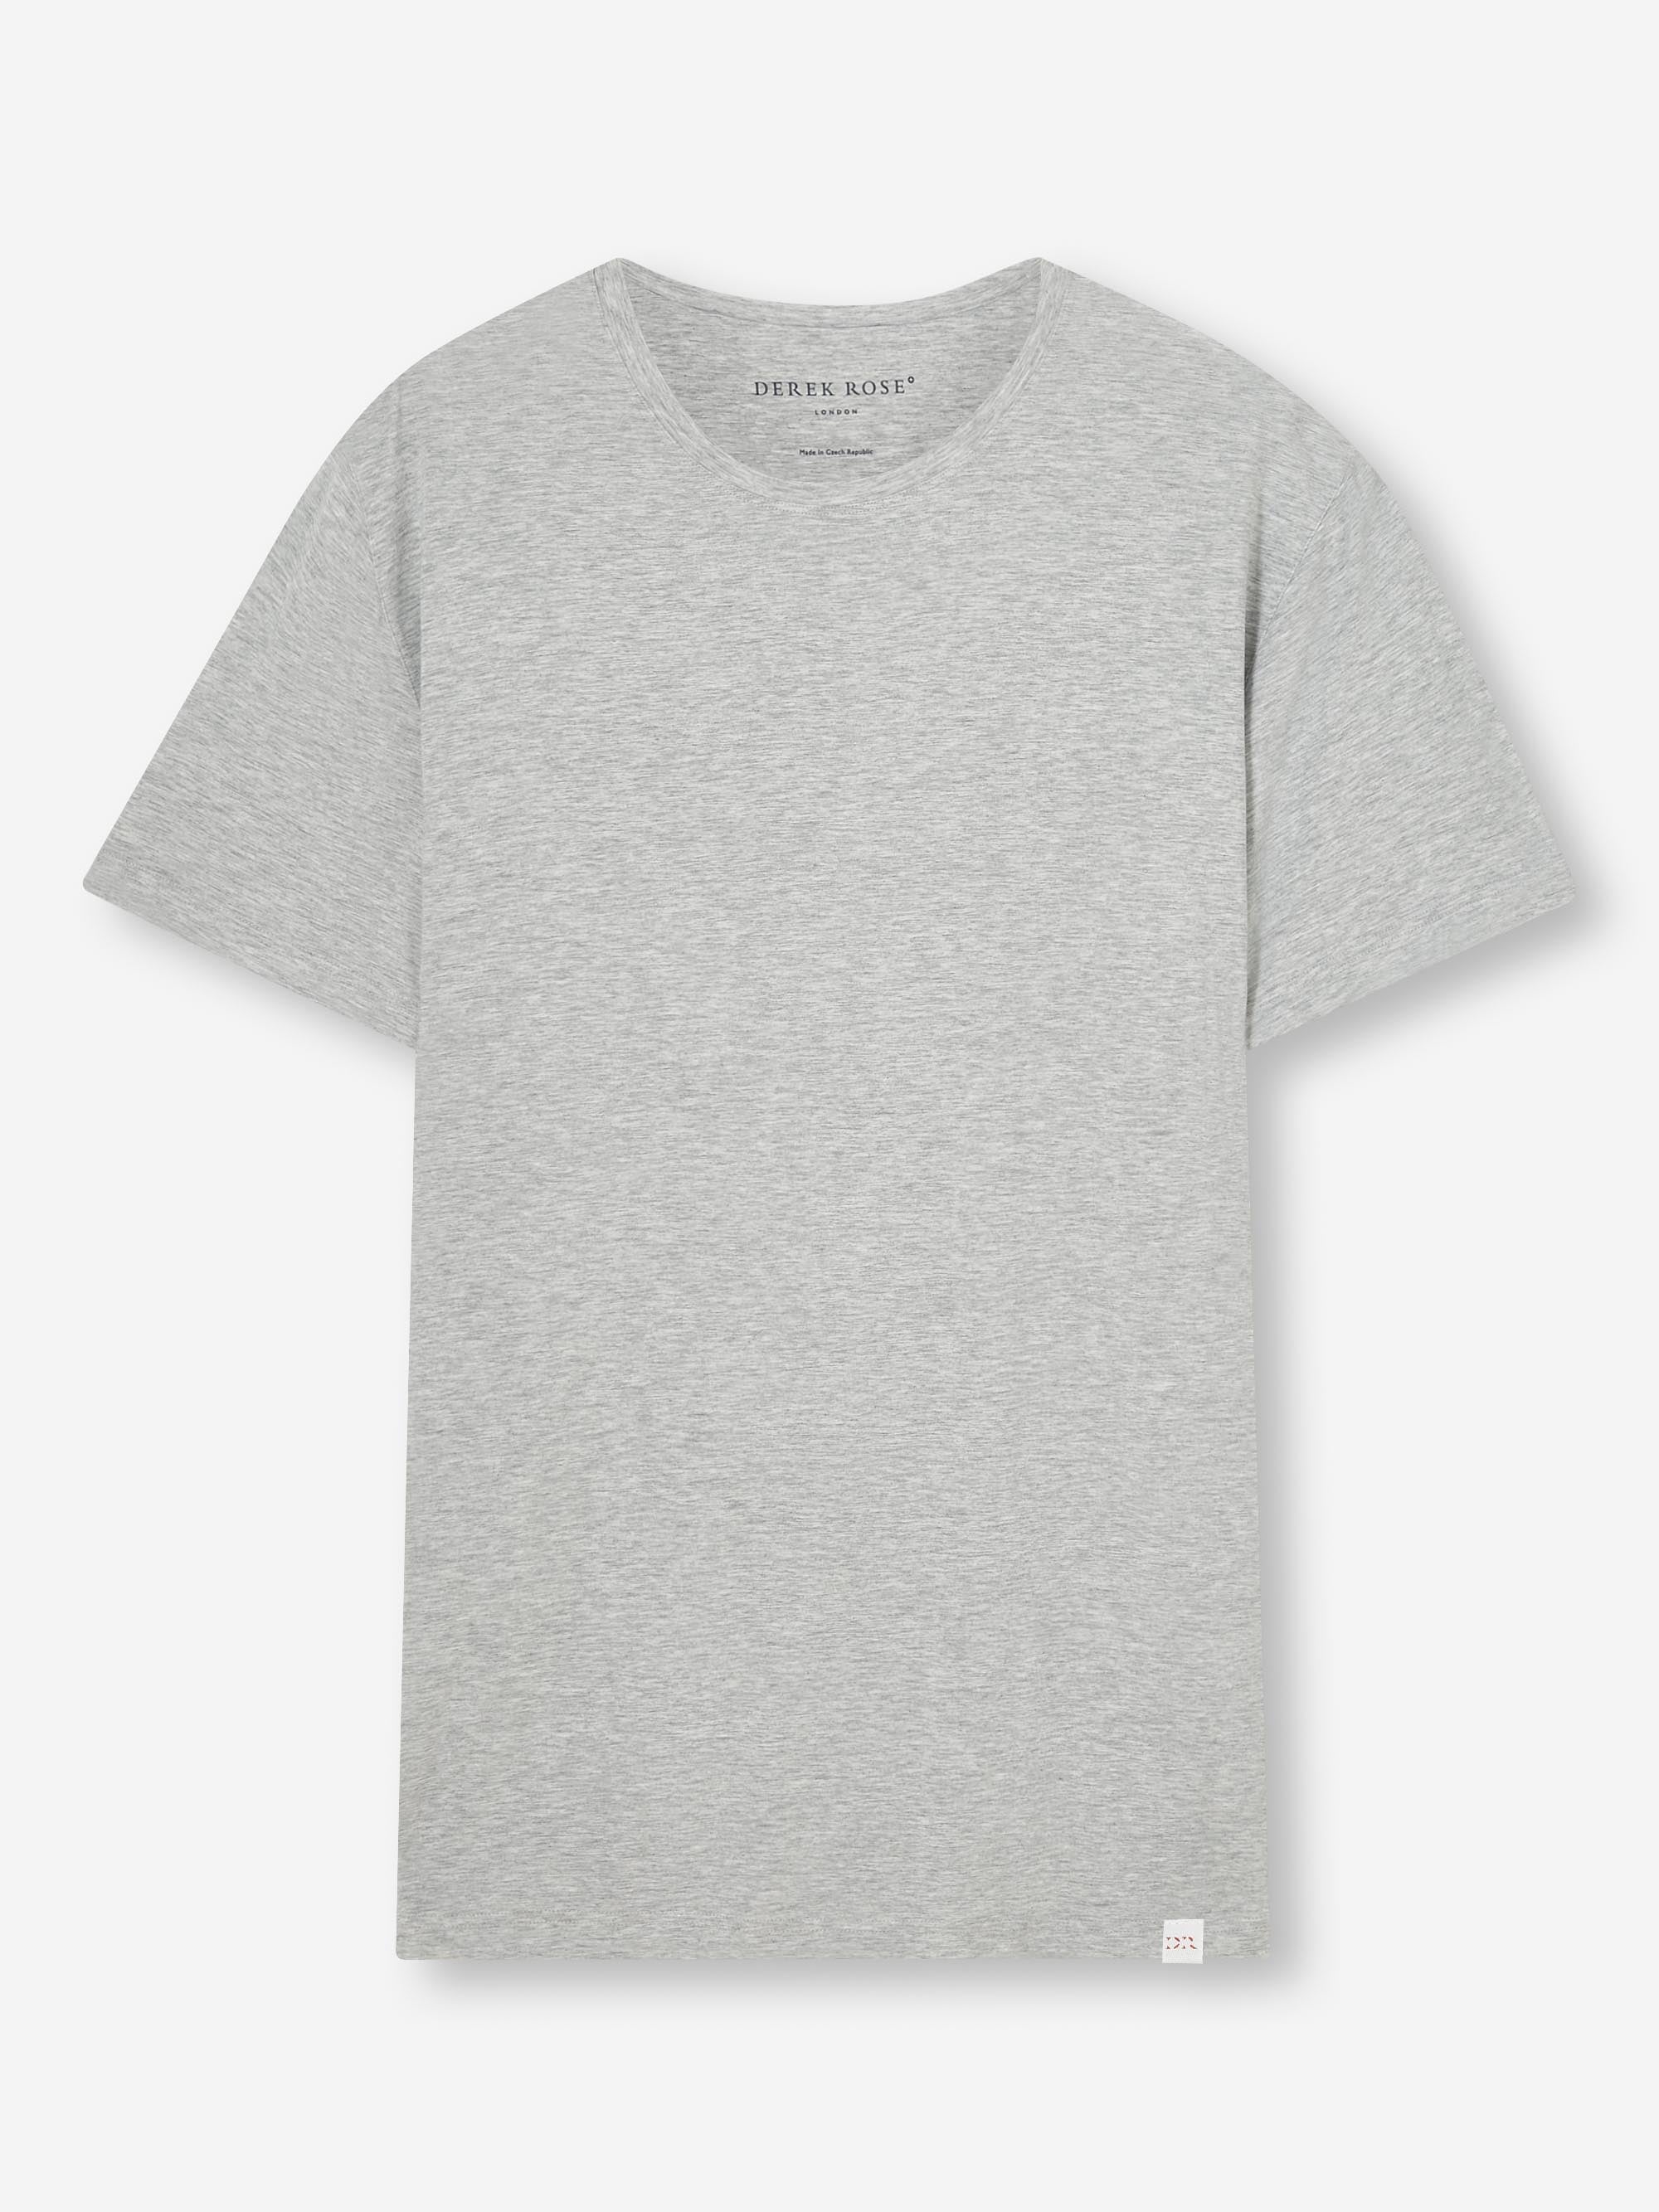 Men's T-Shirt Ethan Micro Modal Stretch Silver